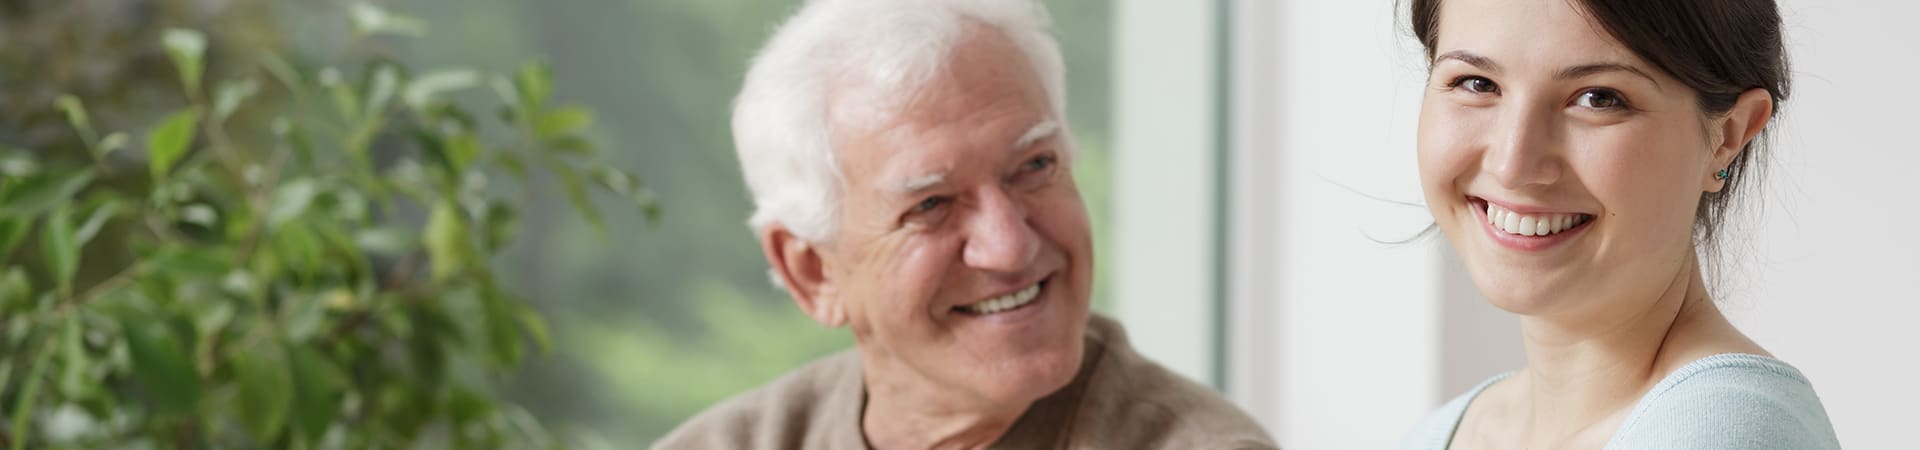 A senior man smiles at his daughter